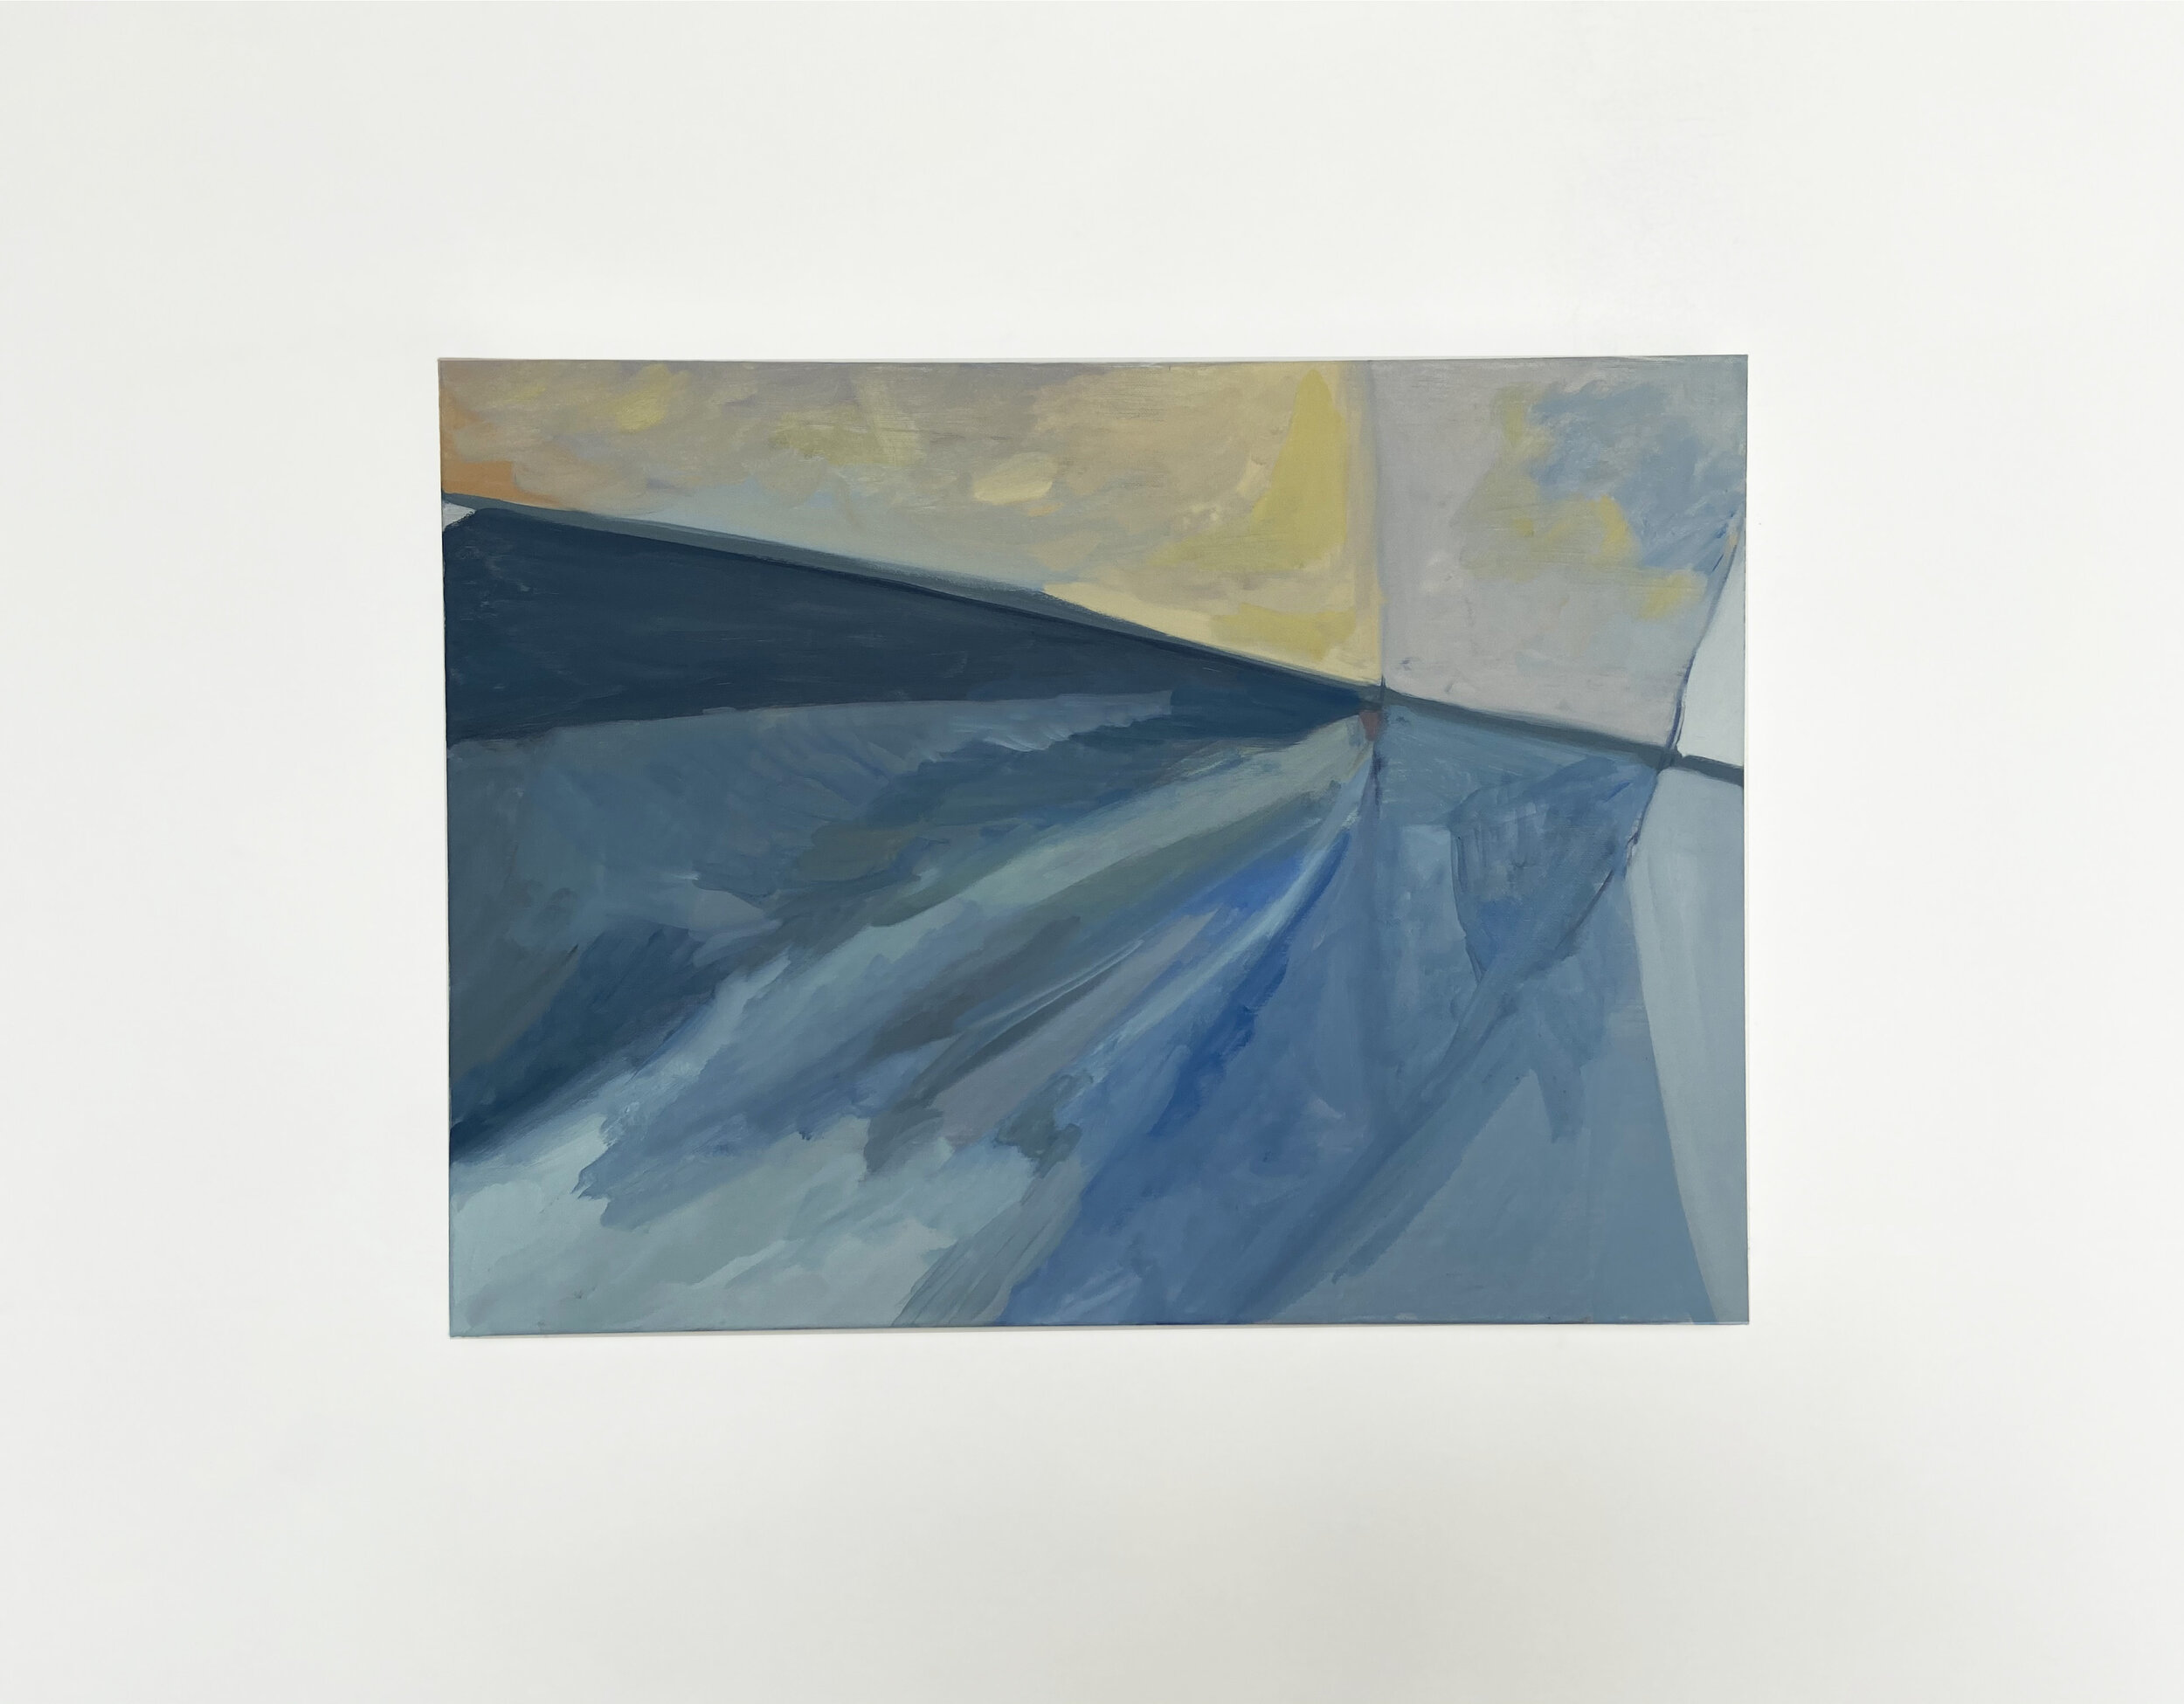   Malibu   18 x 24”  Oil paint on canvas 